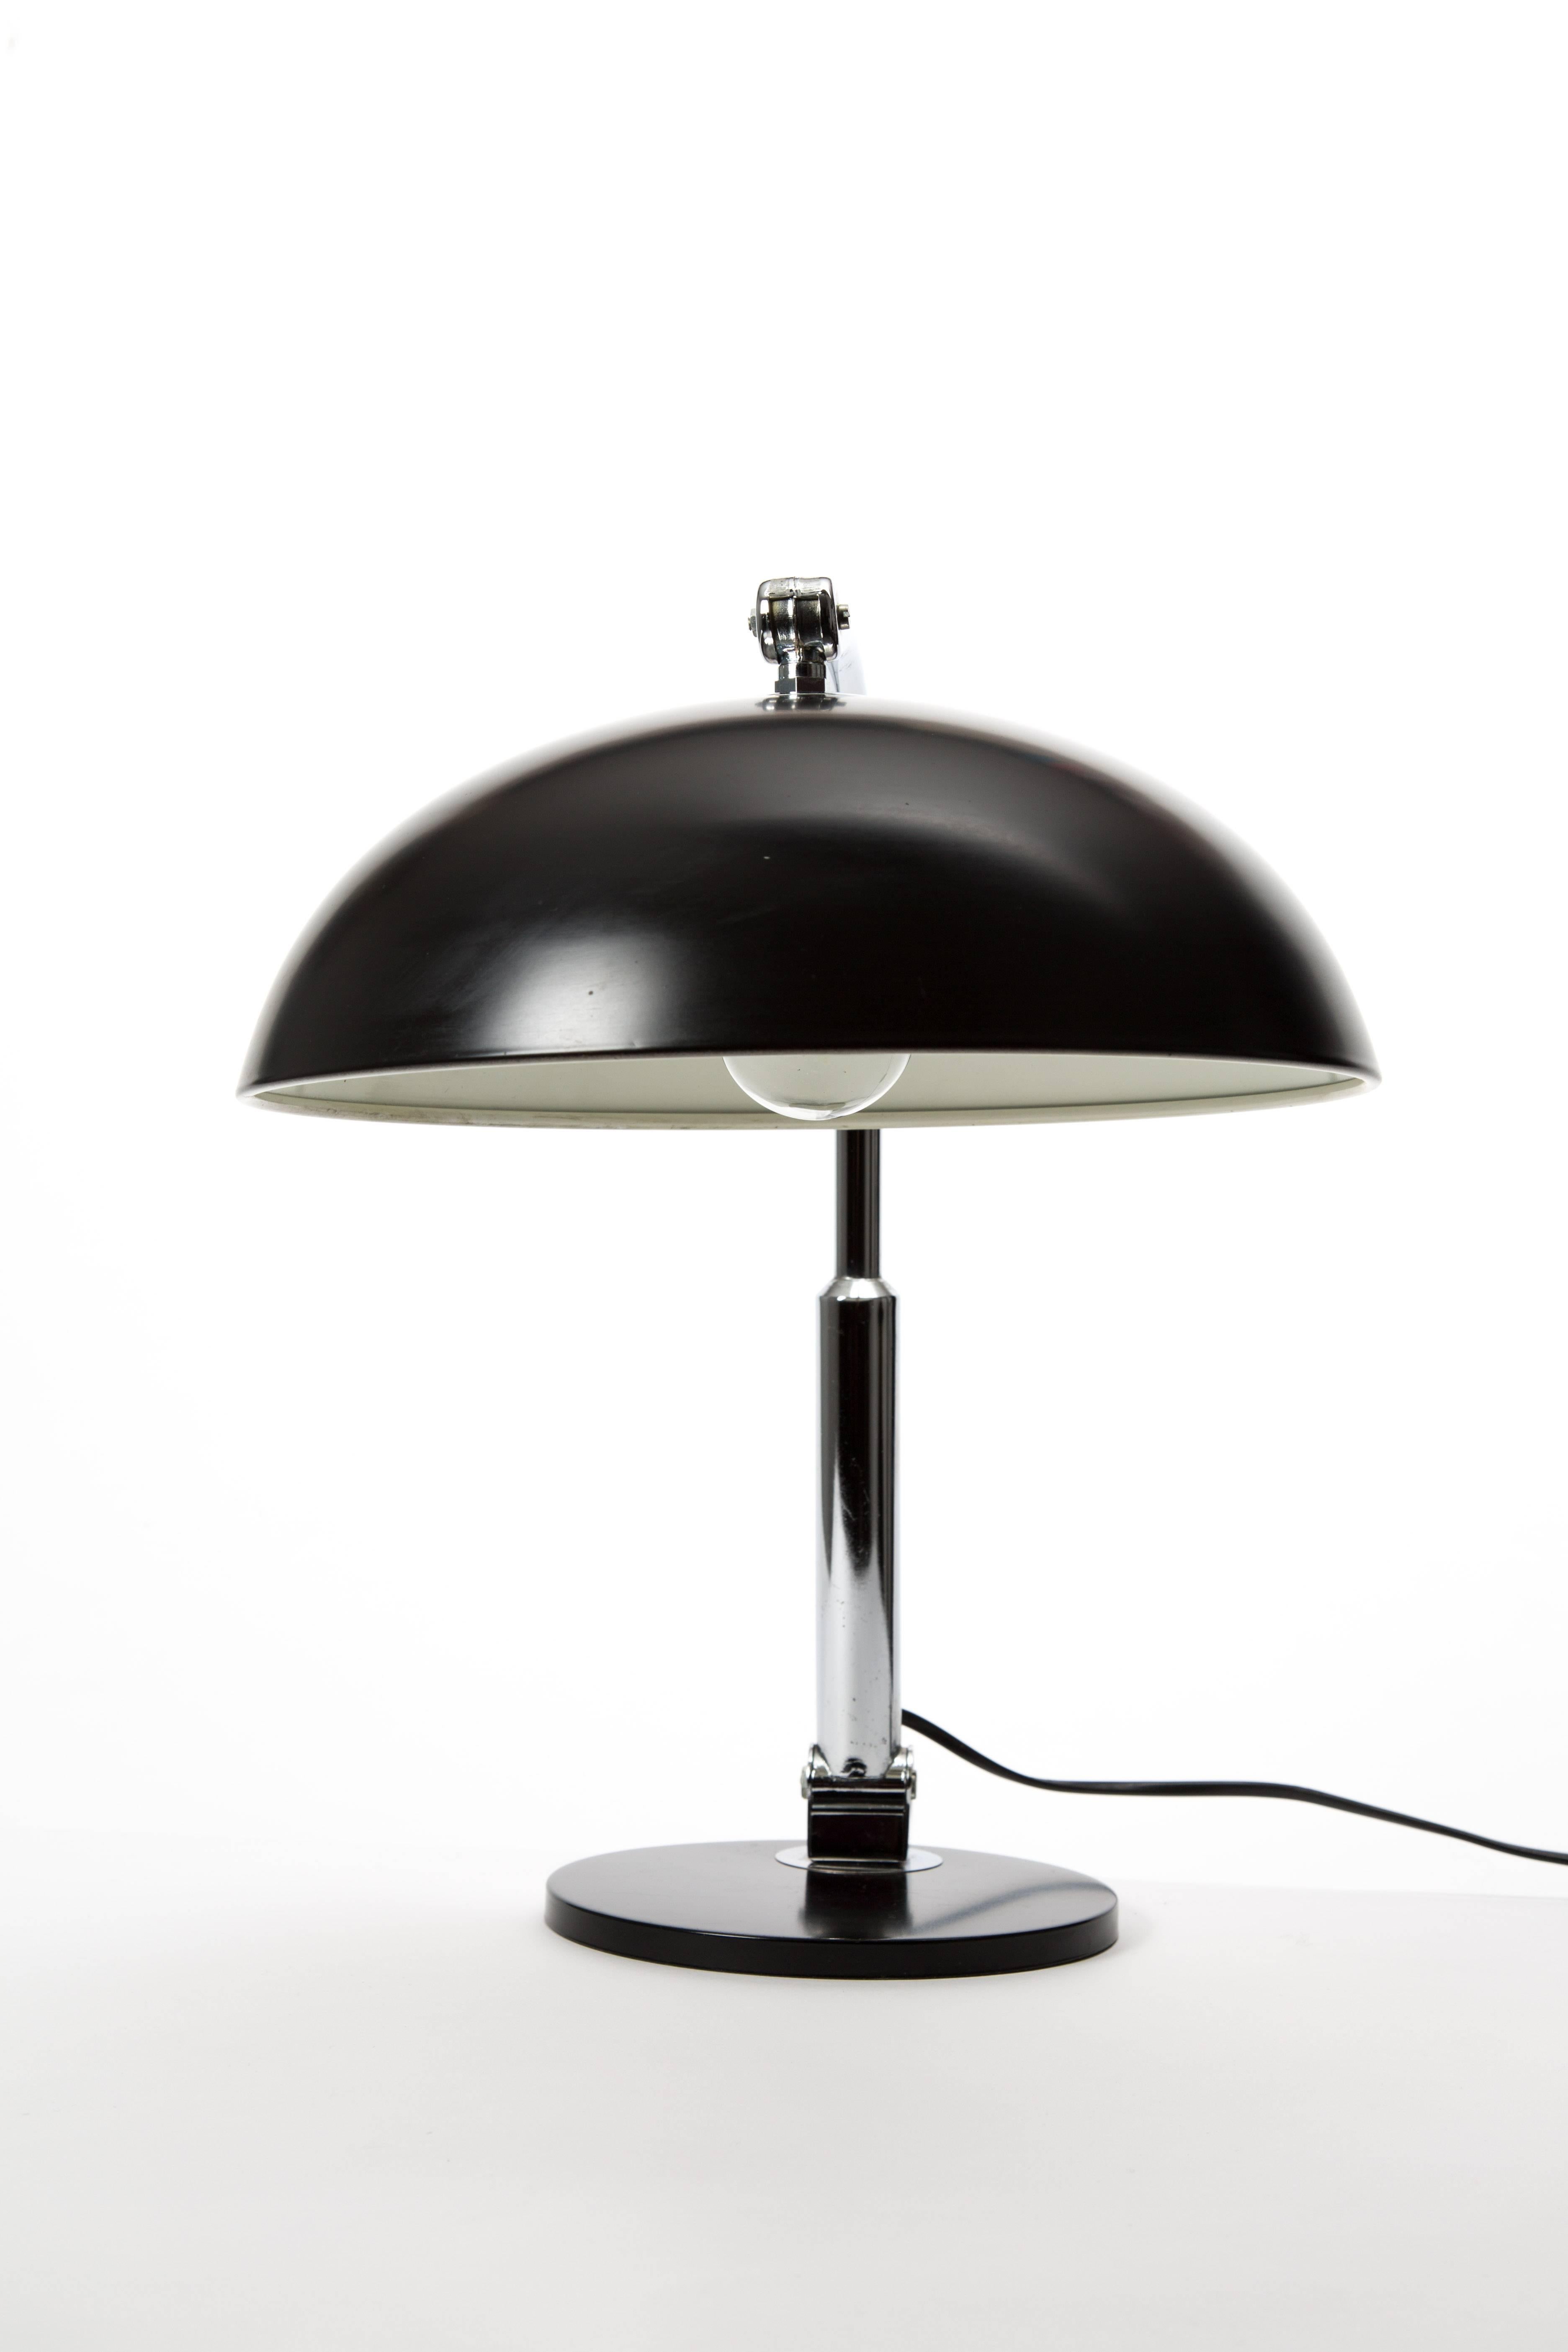 Hala Zeist Table Lamp by J Busquet Black Desk Lamp 5